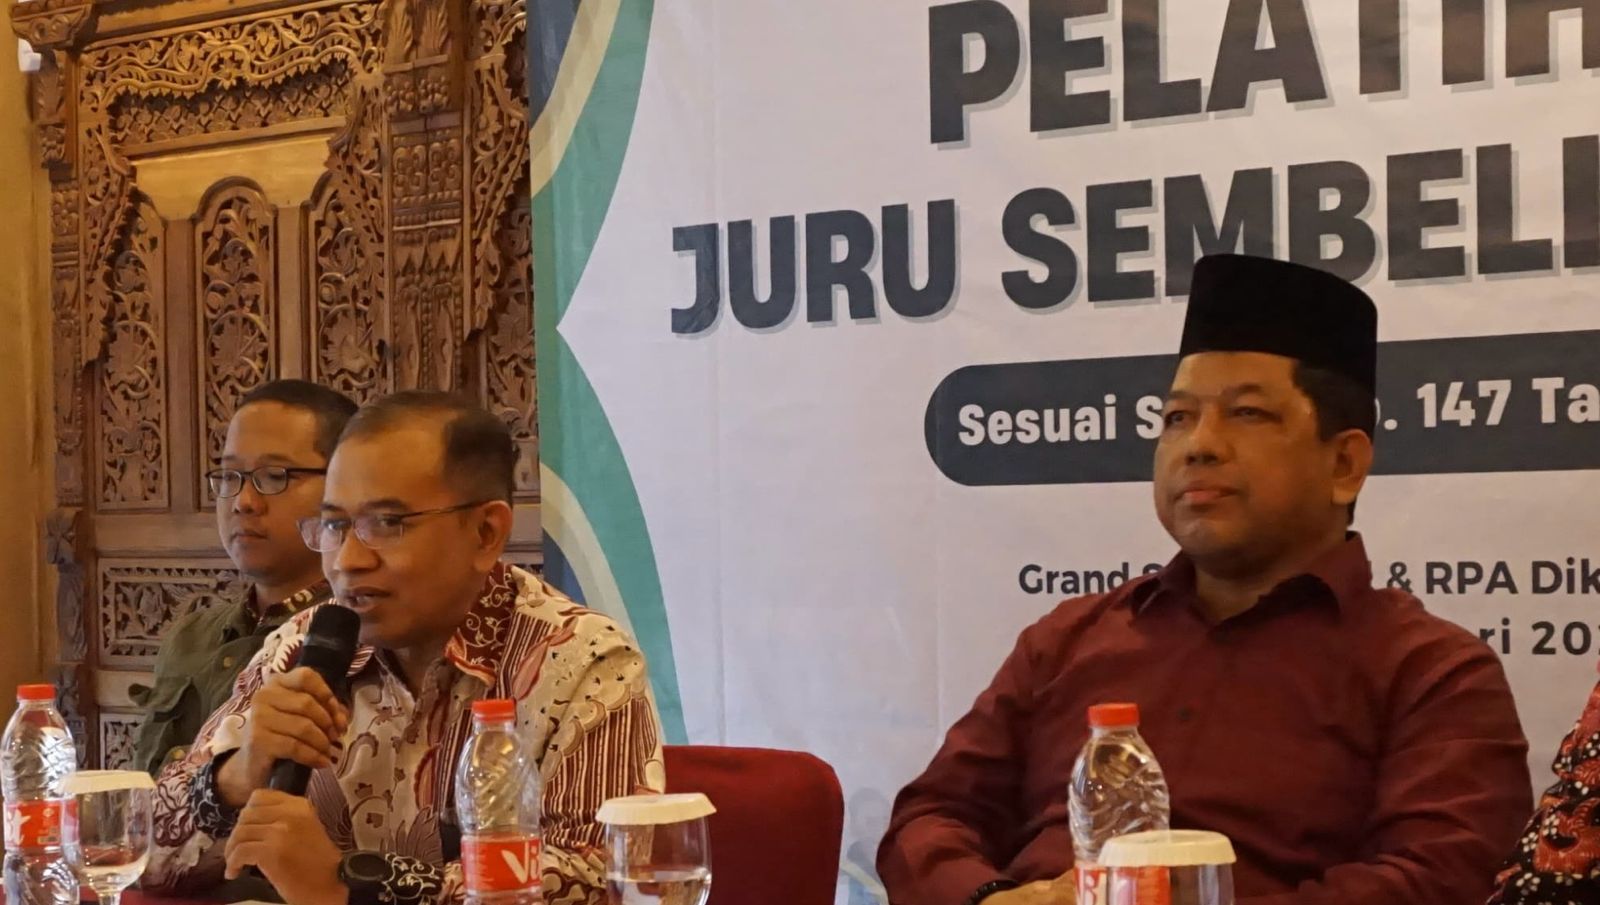 Pelatihan Juru Sembelih Halal di Yogyakarta, PT. Pegadaian Implementasikan Prinsip Ekonomi Syariah